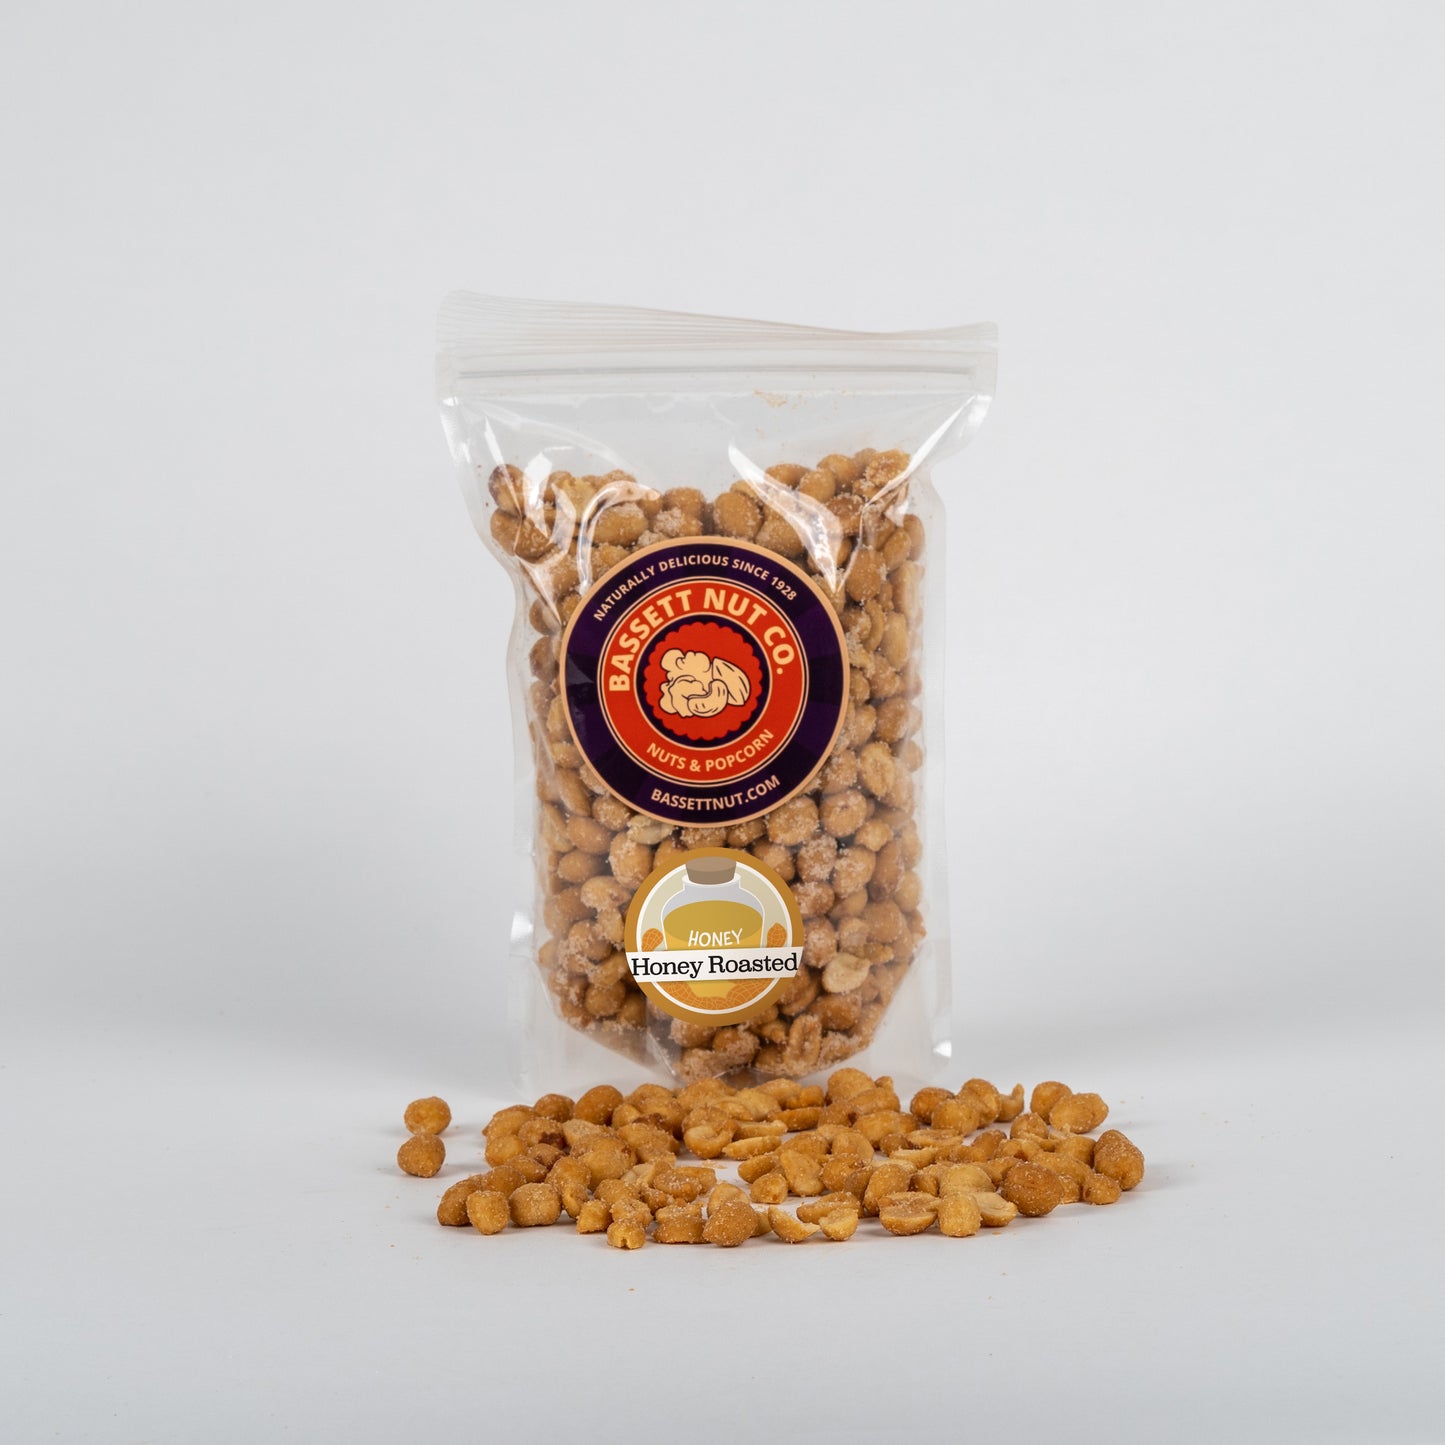 Mixed Nut Box-Six 1 pound Bags